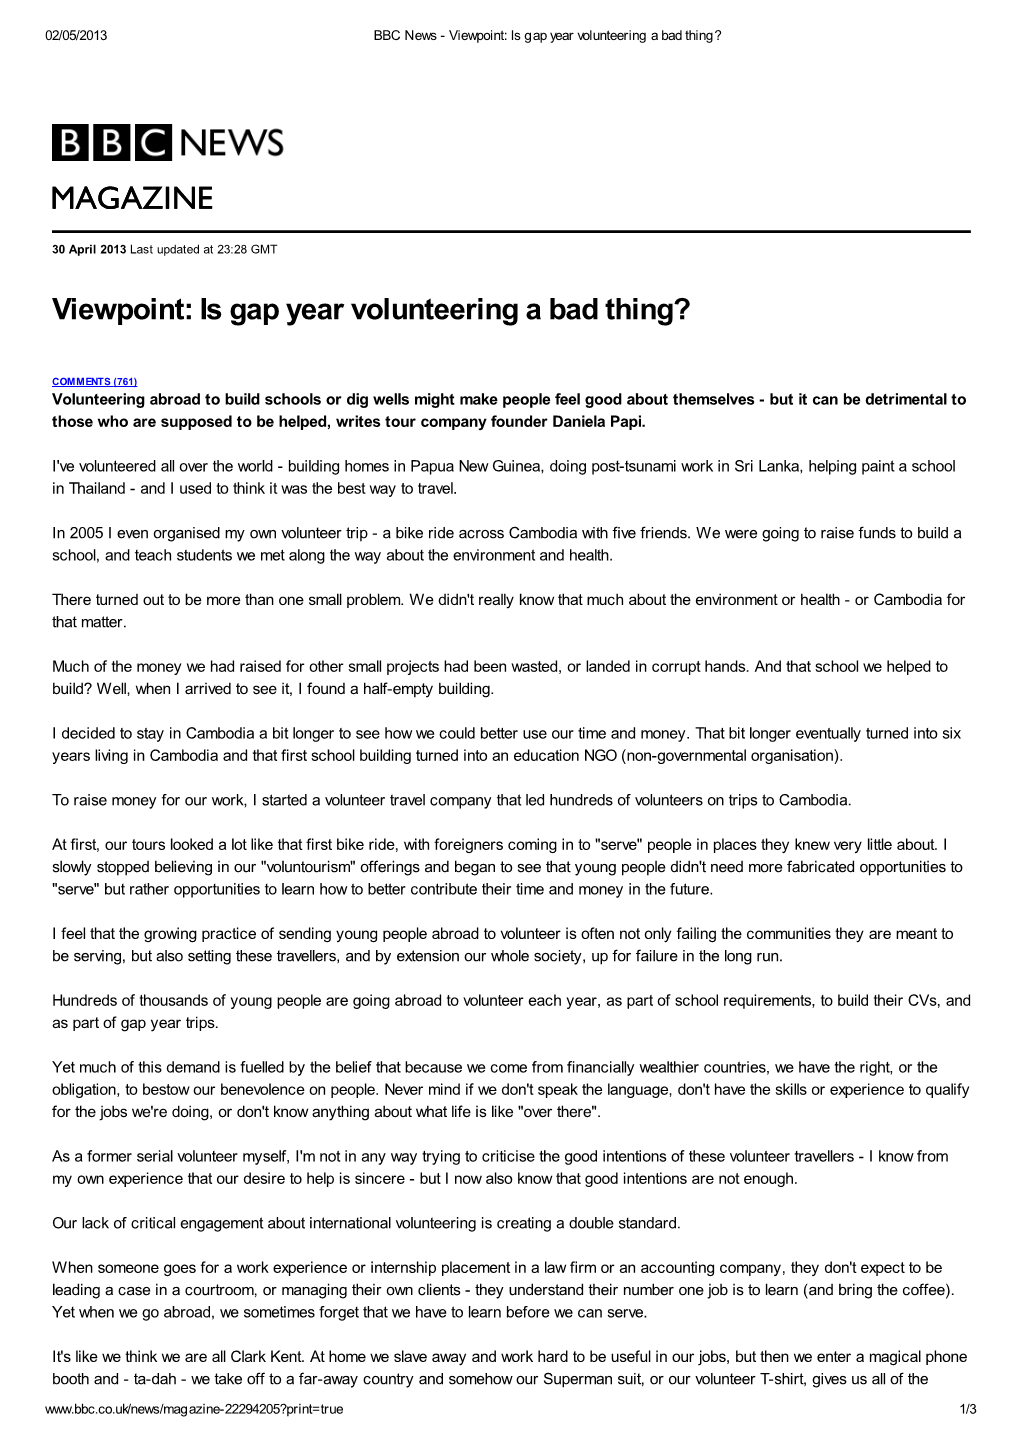 BBC: 'Is Gap Year Volunteering a Bad Thing?'